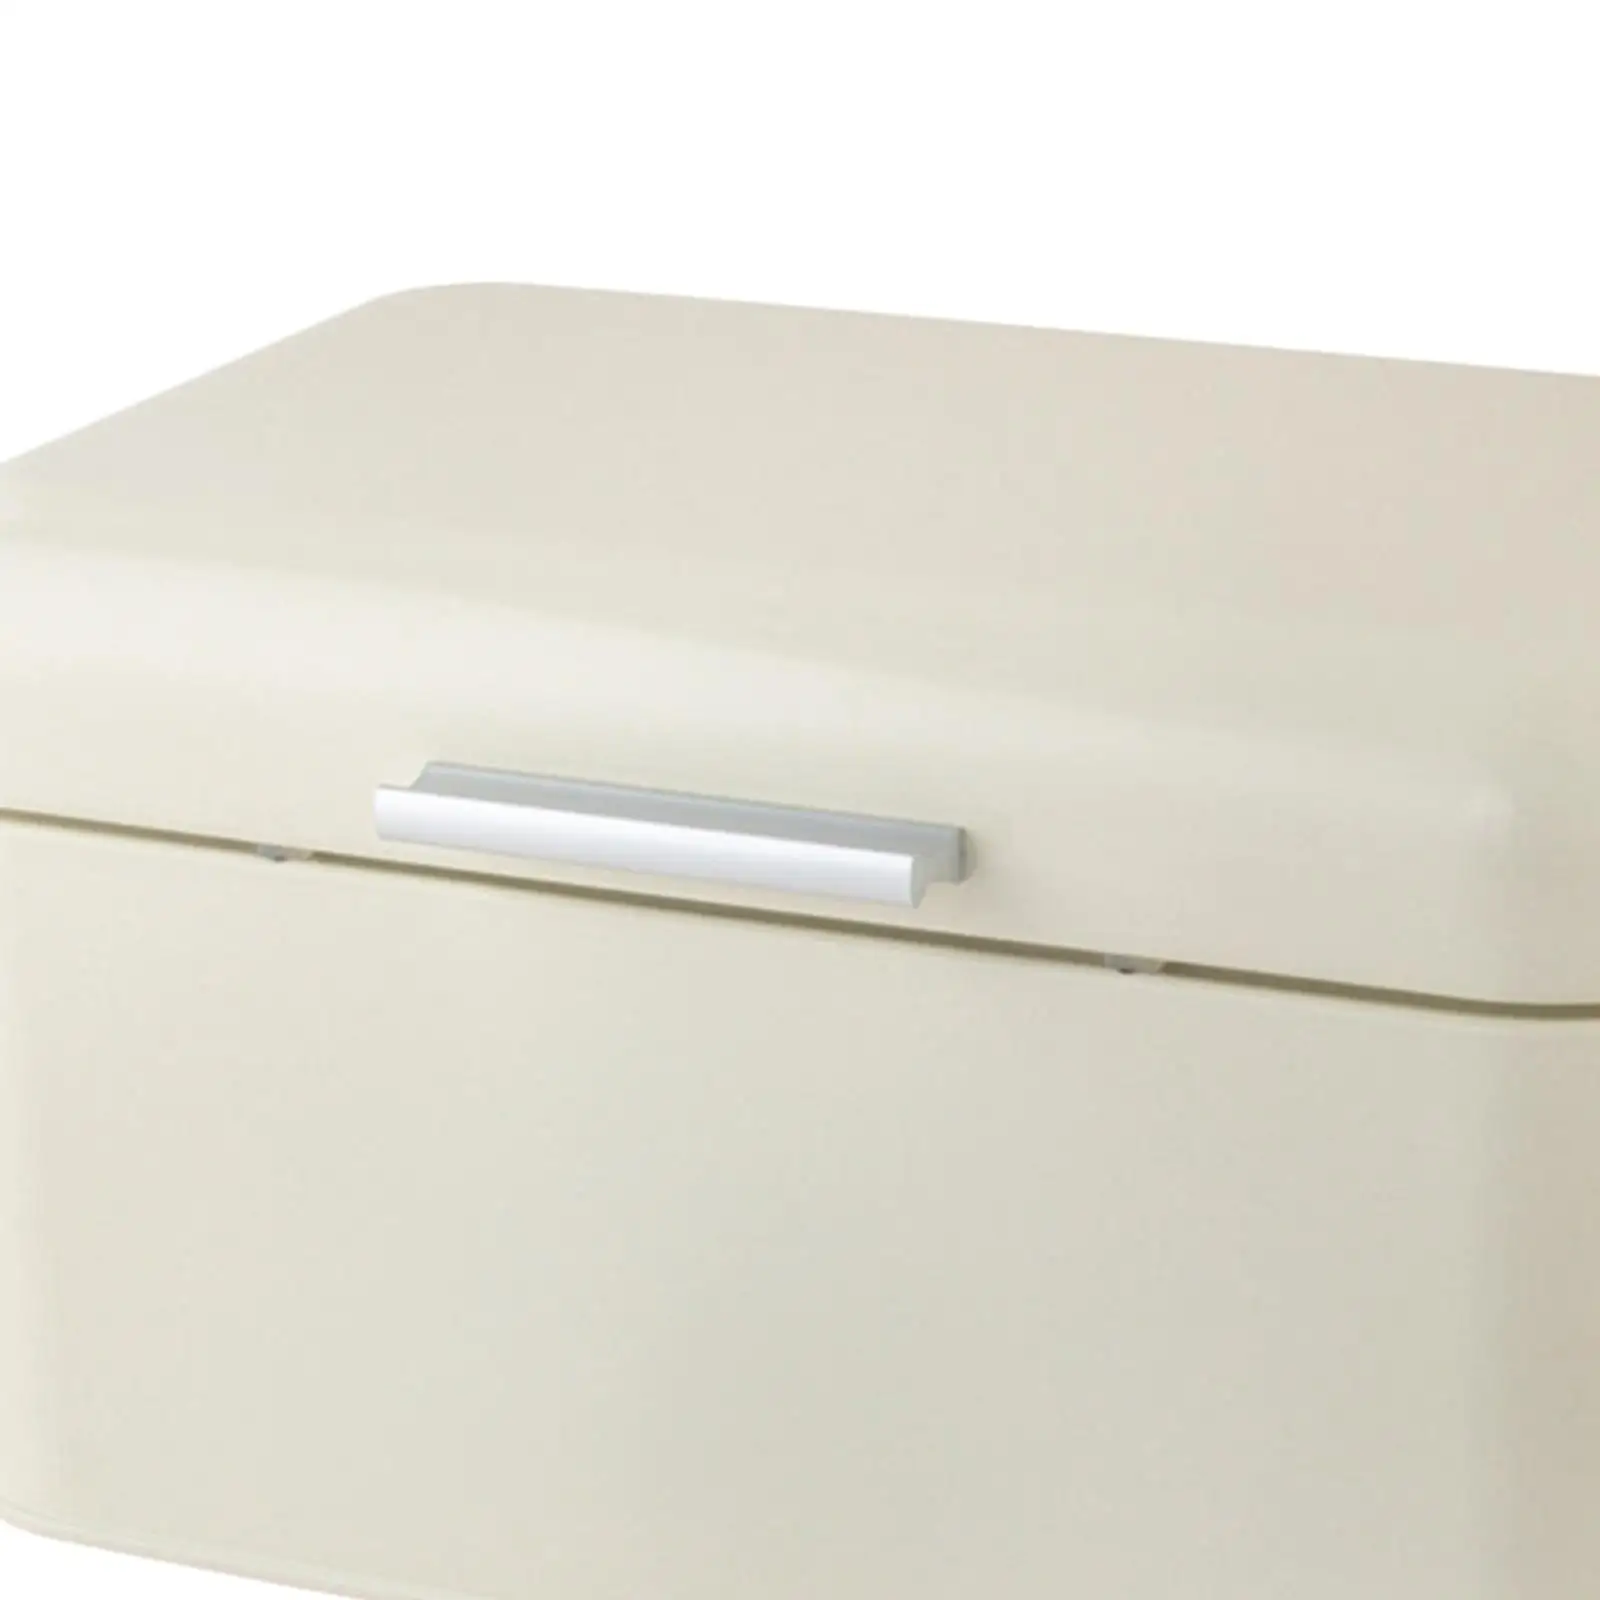 Storage box Storage Case Bread Box Iron Cosmetics Entryway Desktop Mask Snacks Sundries Large Capacity Container Organizer